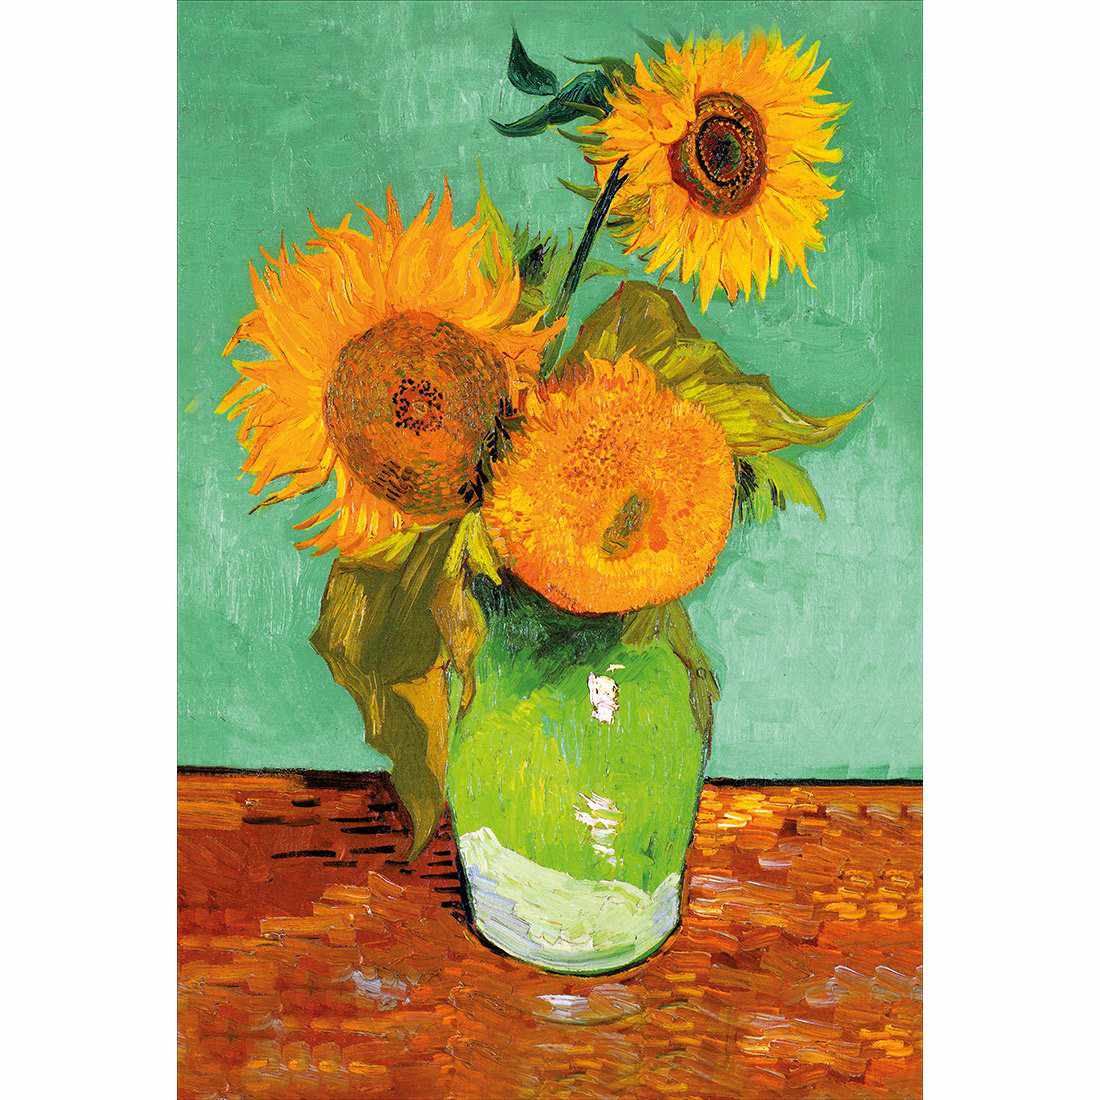 Sunflowers On Green by Van Gogh Canvas Art-Canvas-Wall Art Designs-45x30cm-Canvas - No Frame-Wall Art Designs